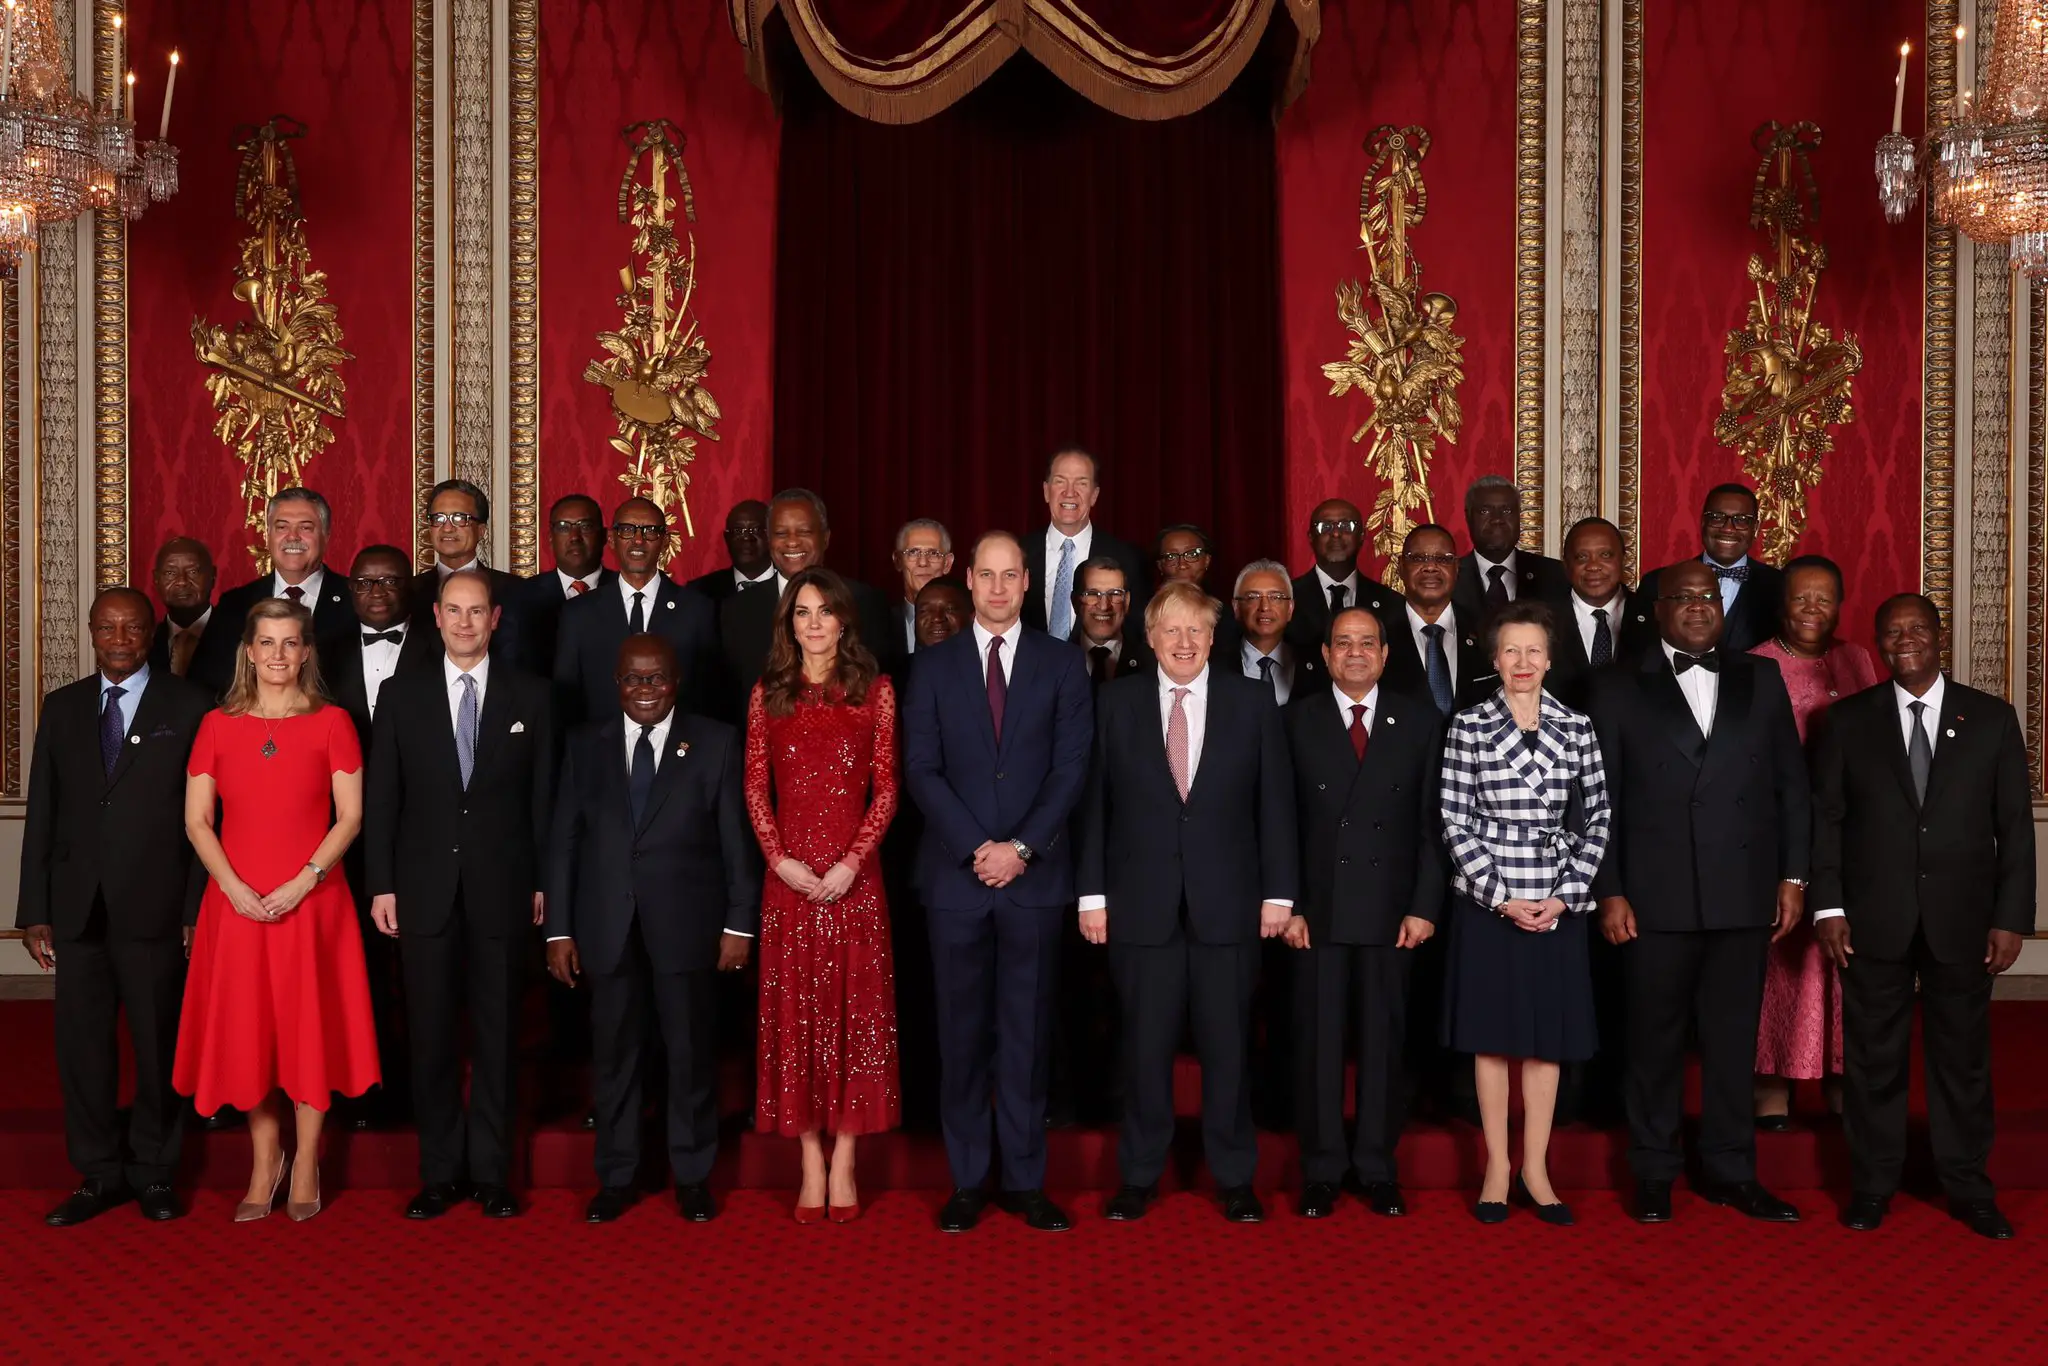 The Duke and Duchess of Cambridge host the UK-Africa summit reception at Buckingham Palace